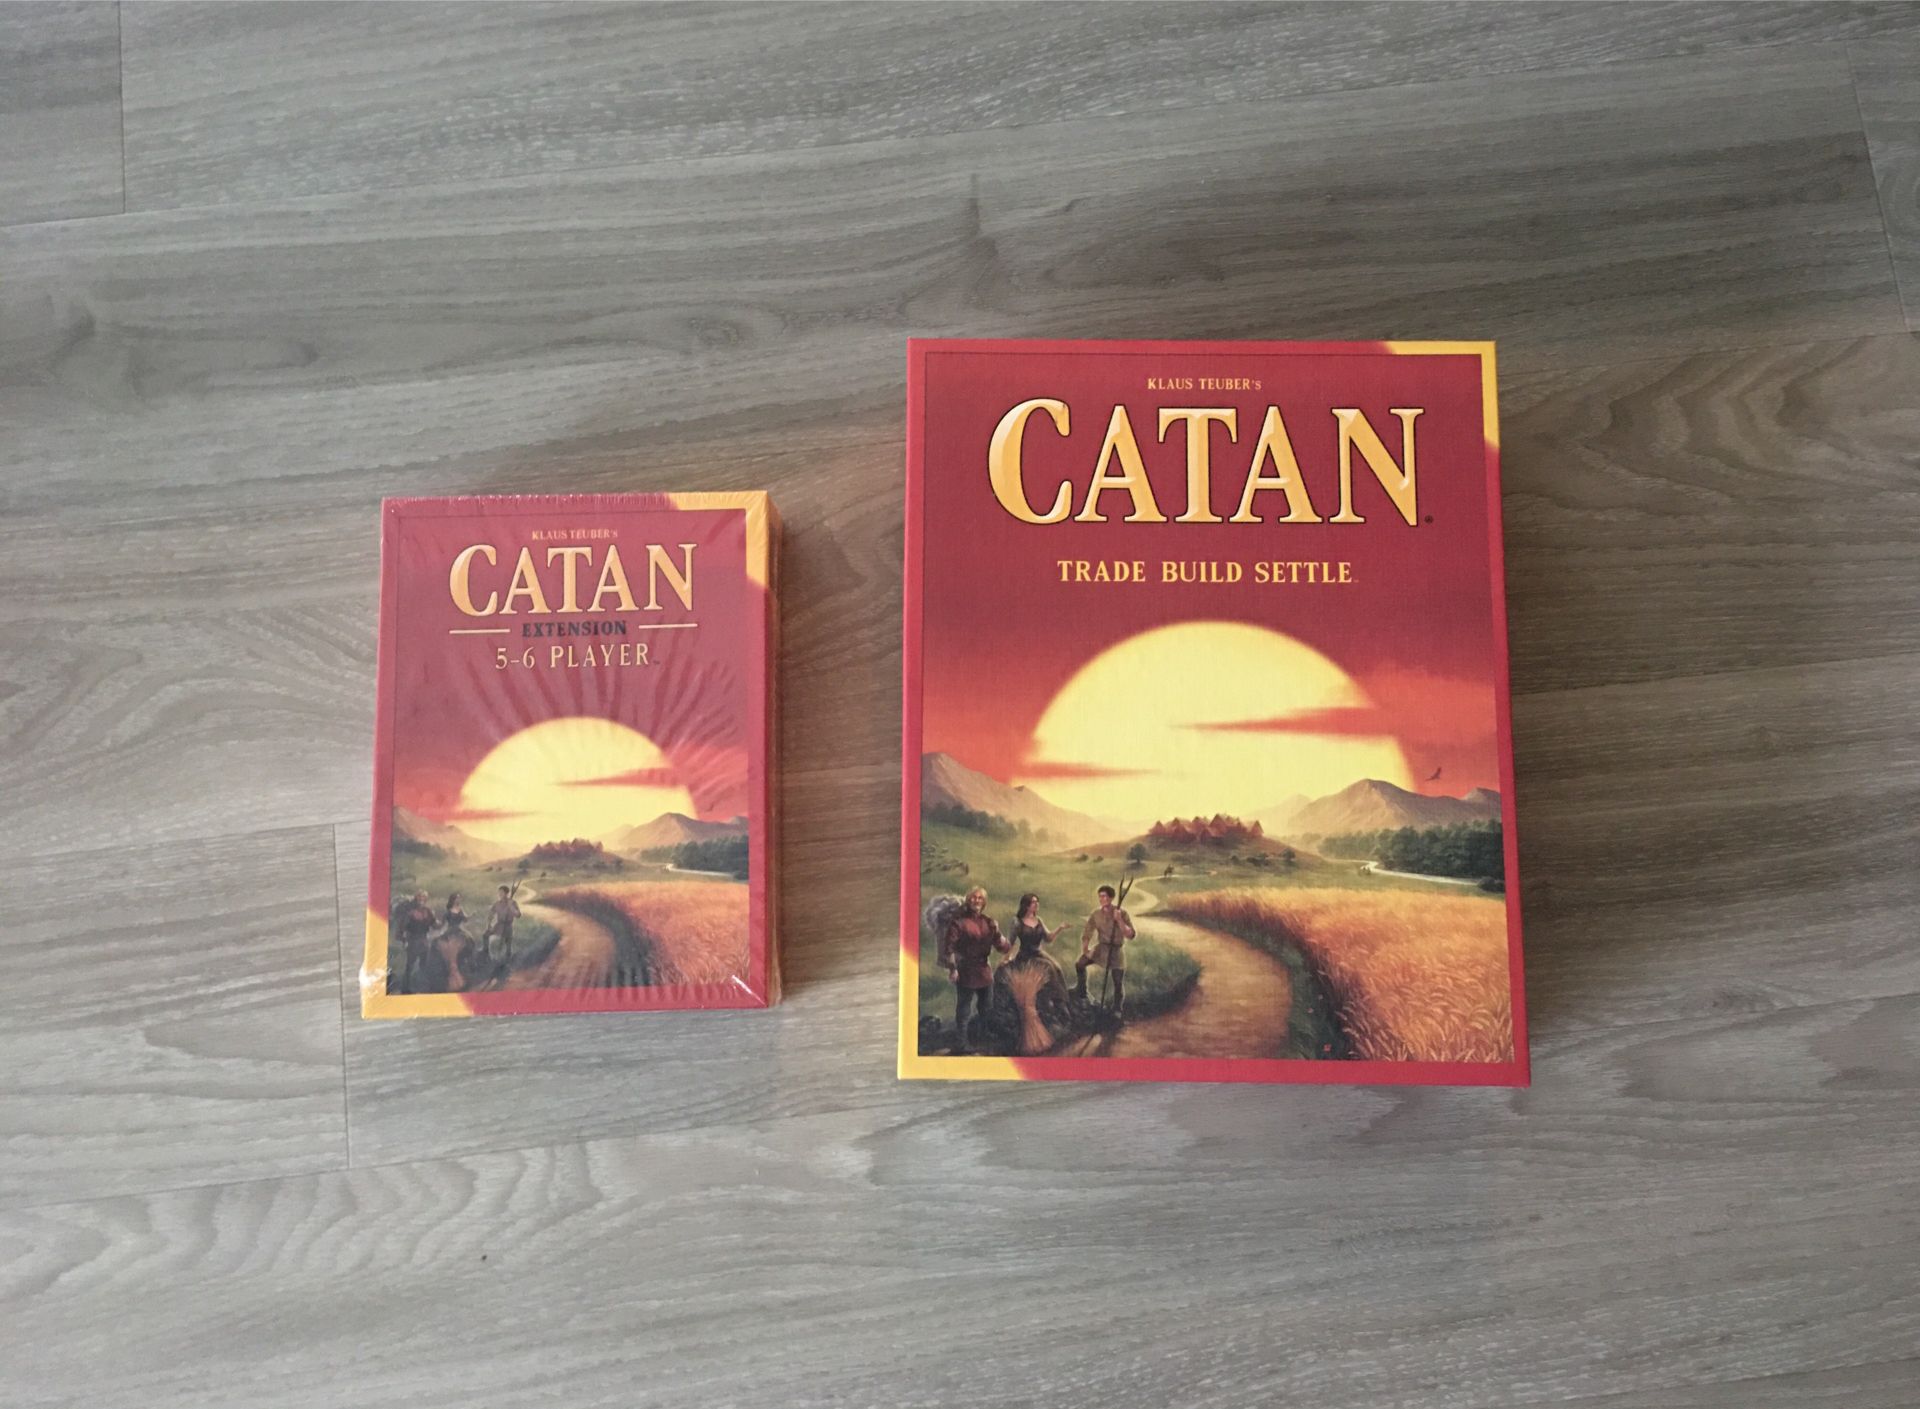 Catan Board Game